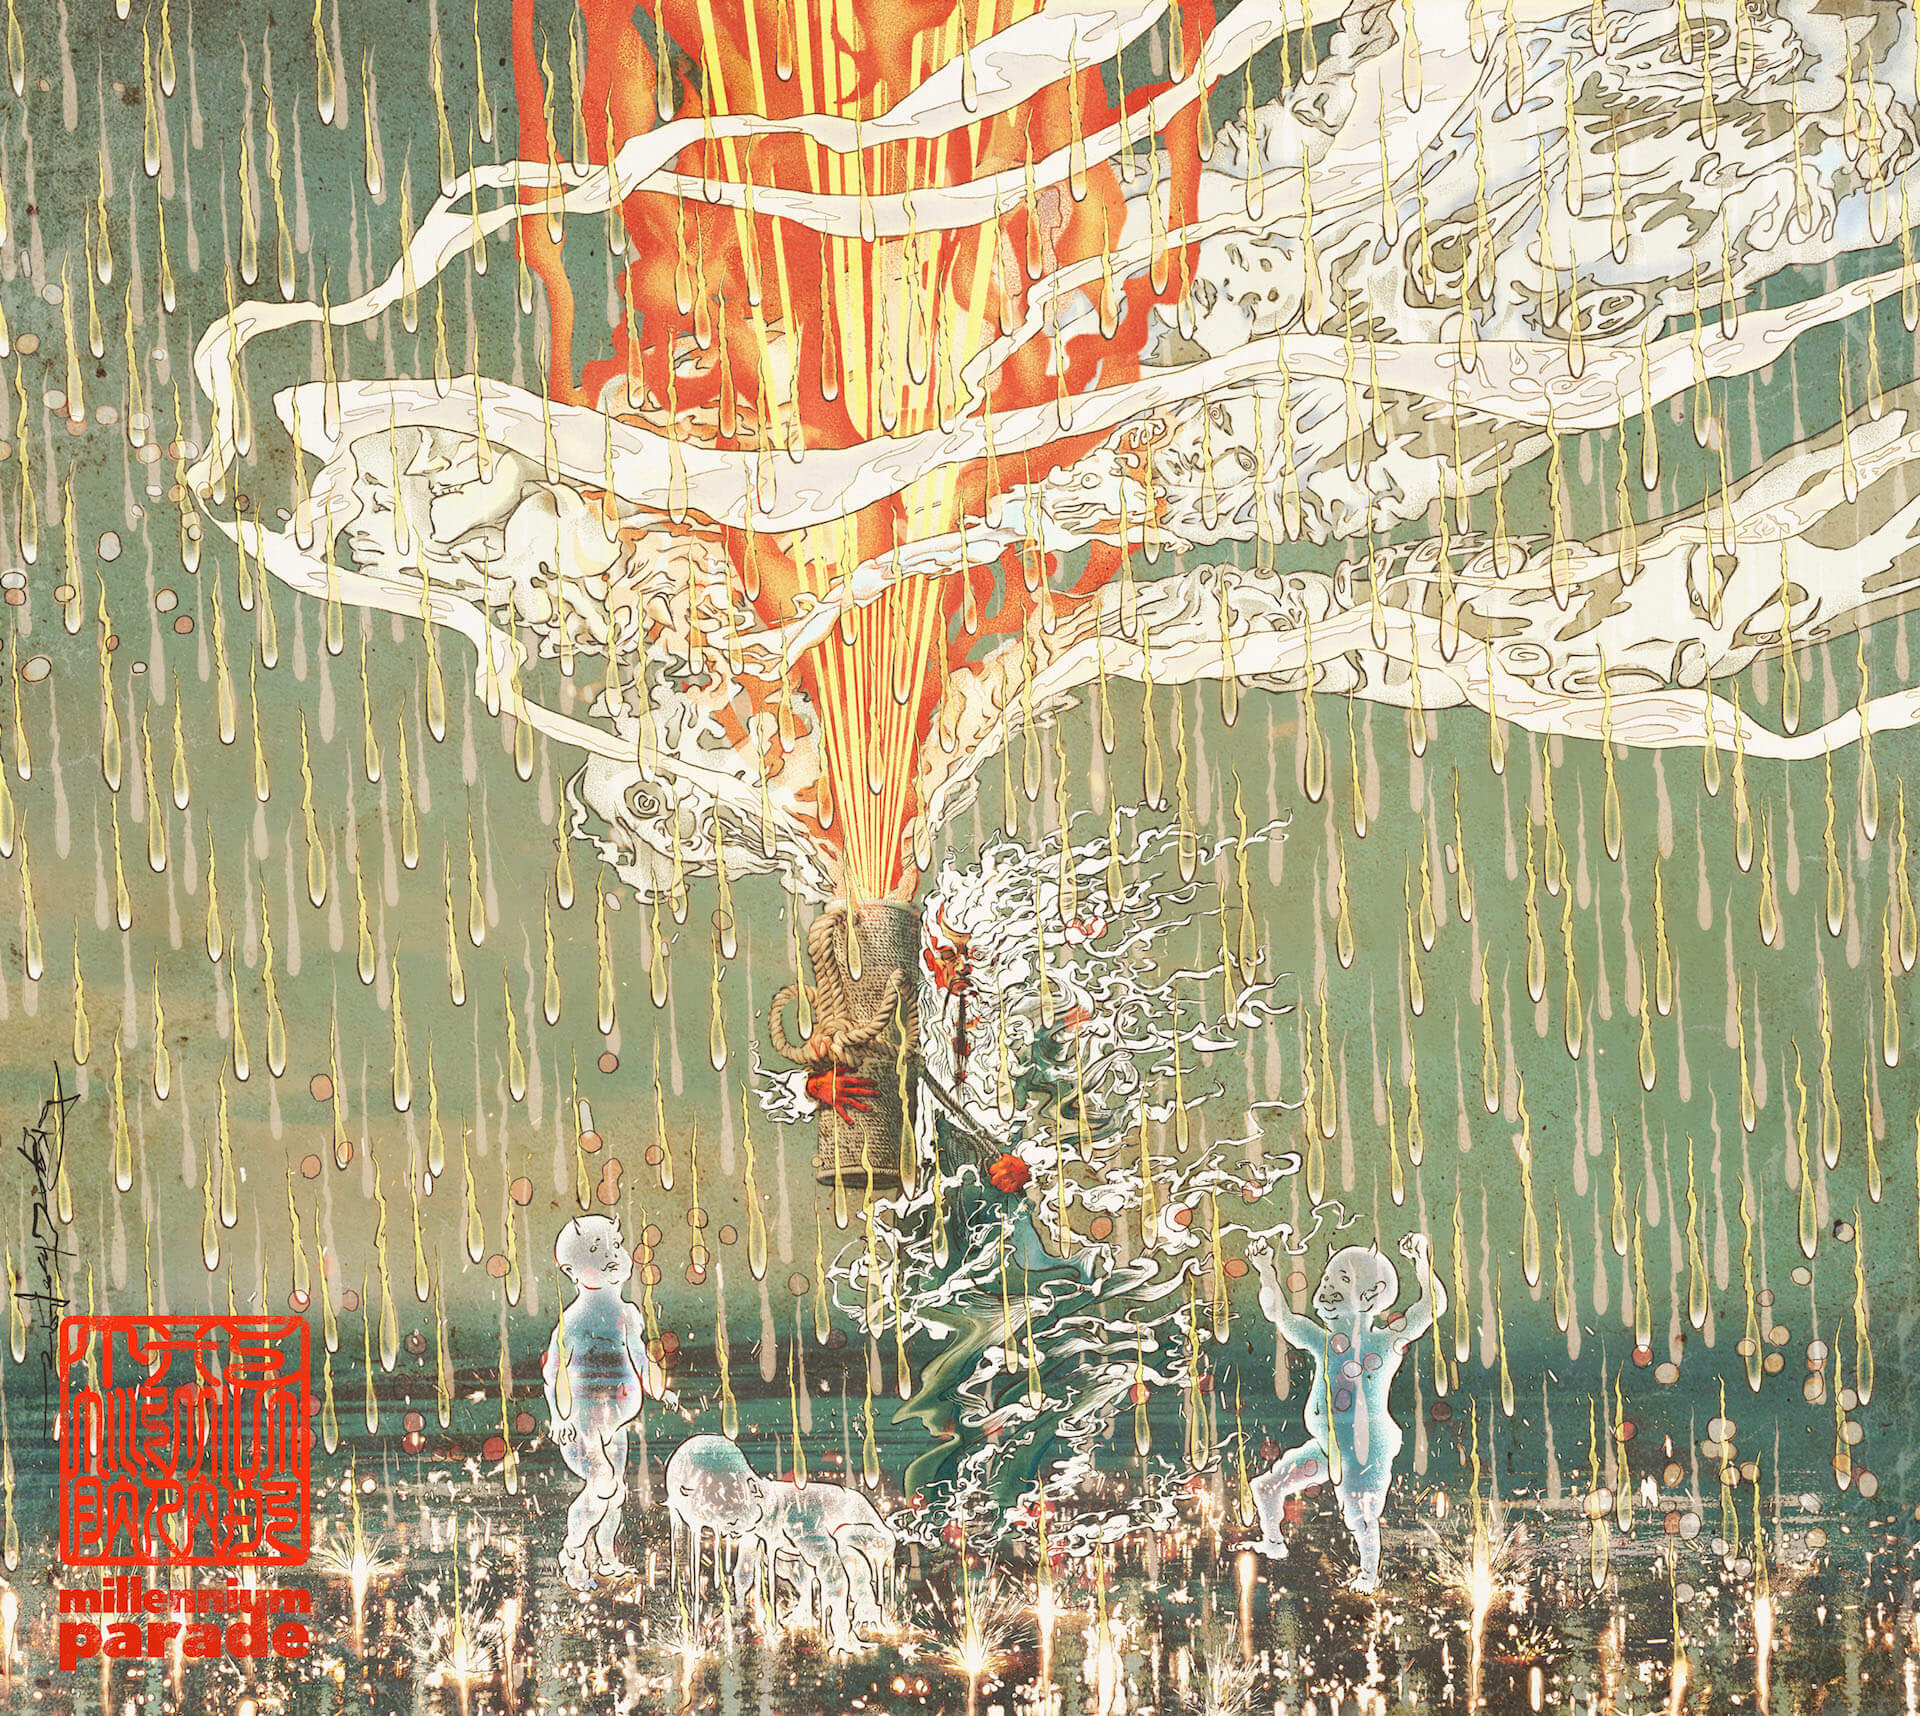 King Gnu常田大希のソロプロジェクト・millennium paradeの1stアルバムがリリース決定！3Dライブの開催も発表 music201125_millenniumparade_2